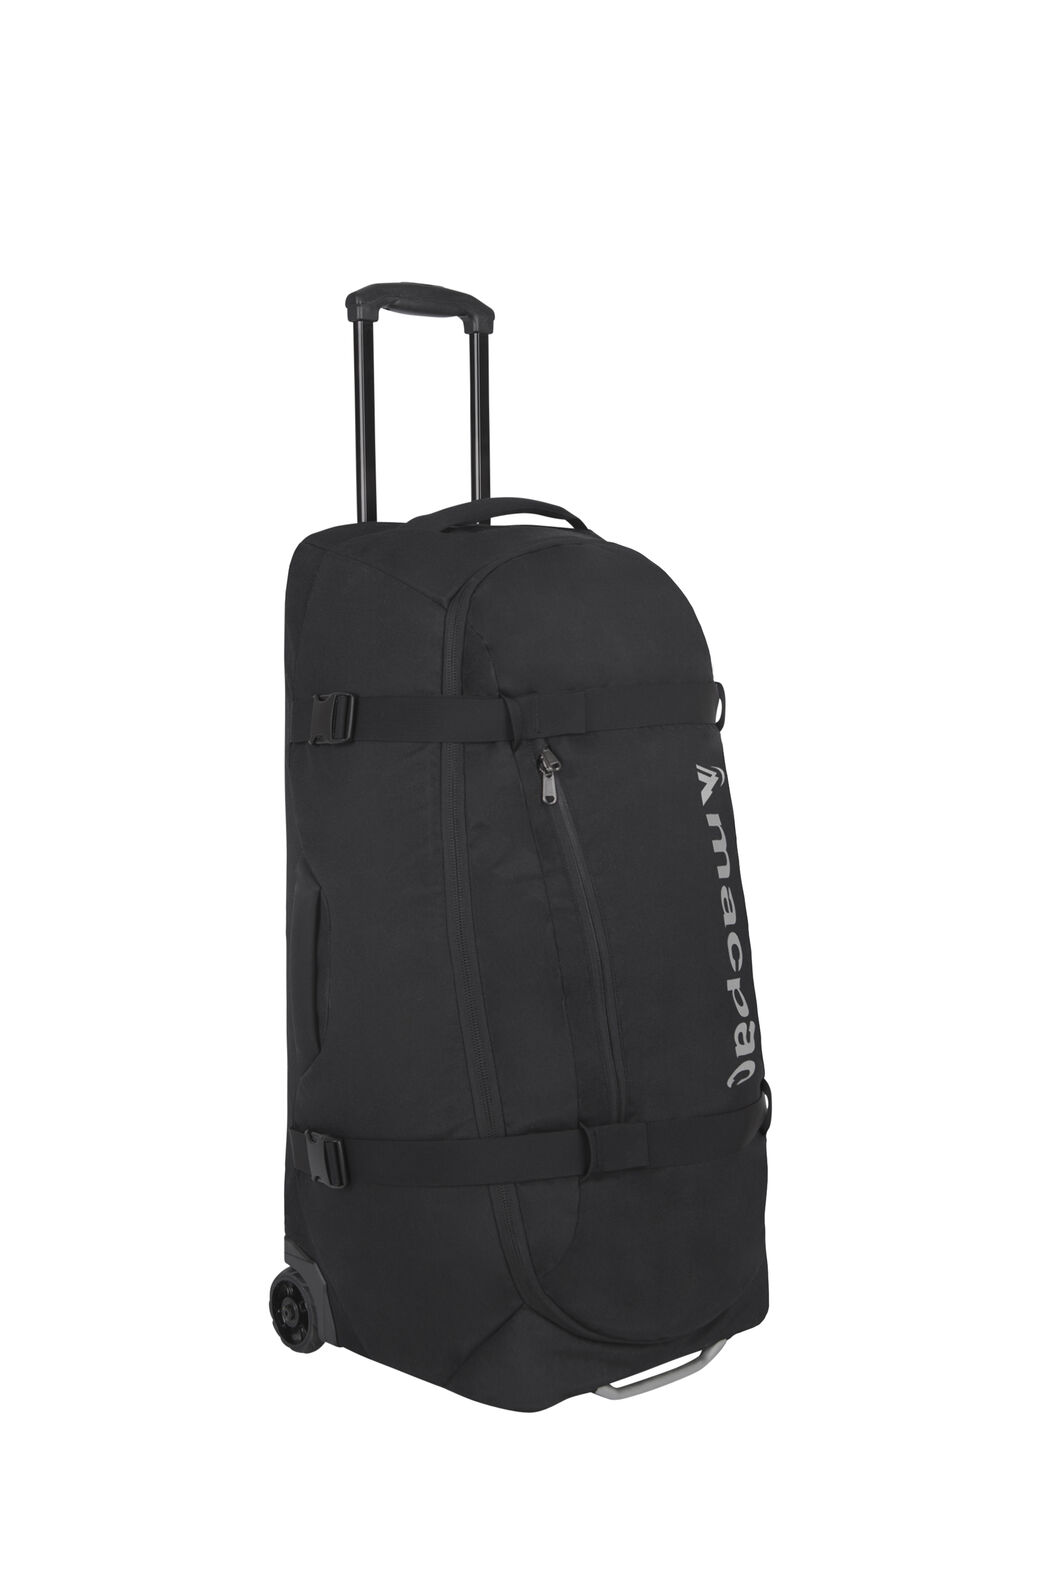 macpac global 55l travel bag